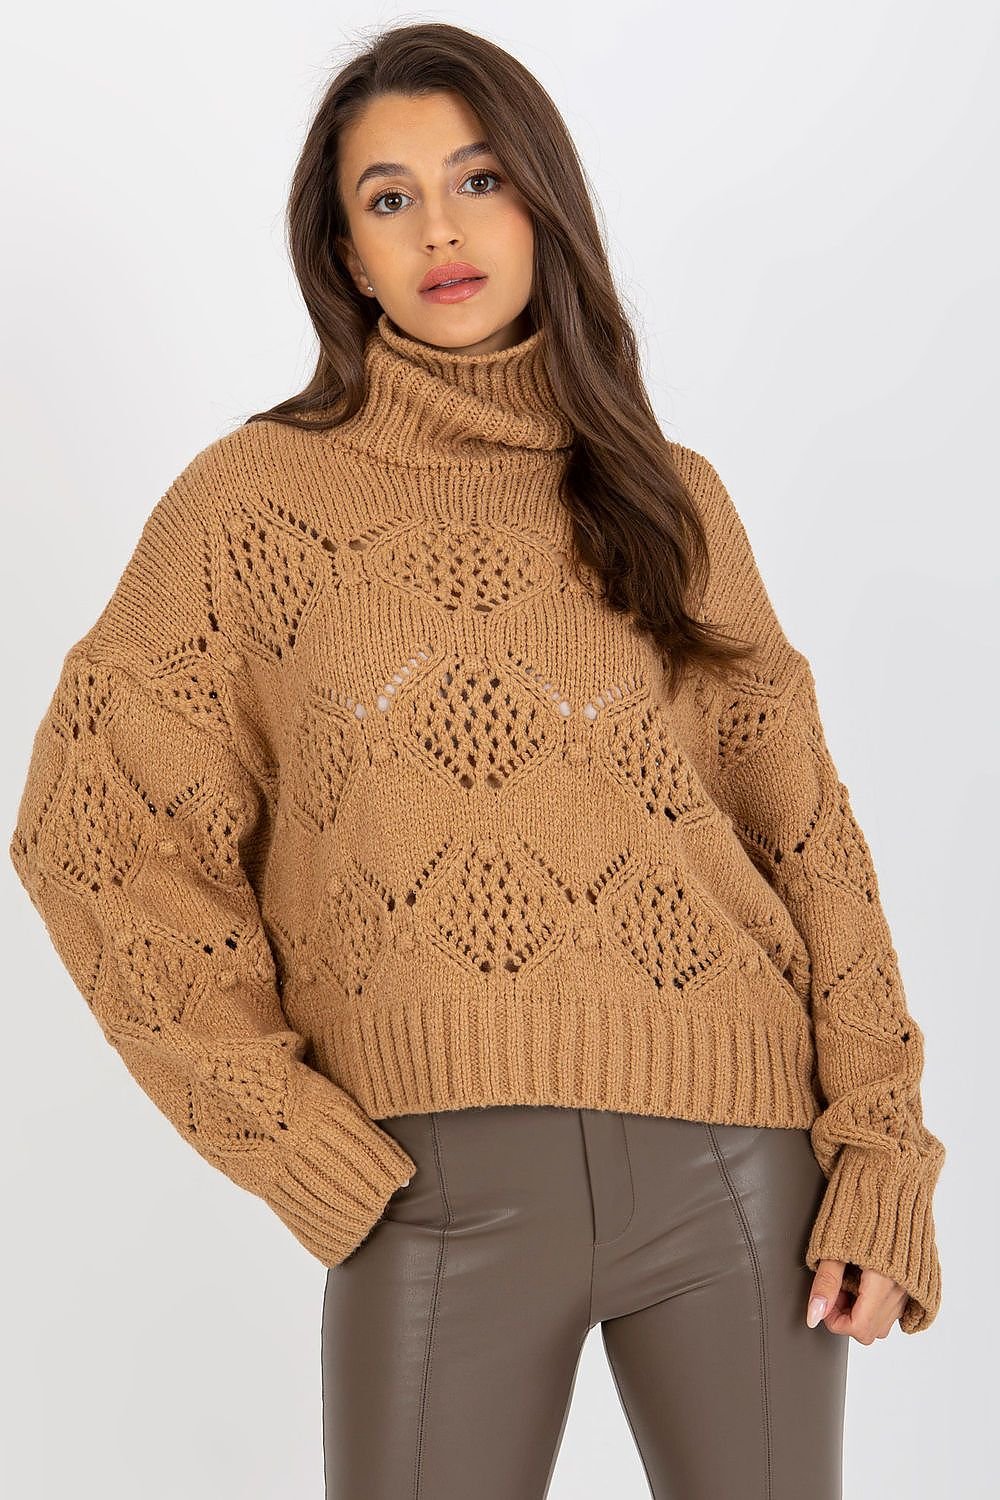 TEEK - Turtleneck Knitted Loose Sweater SWEATER TEEK MH brown One Size 